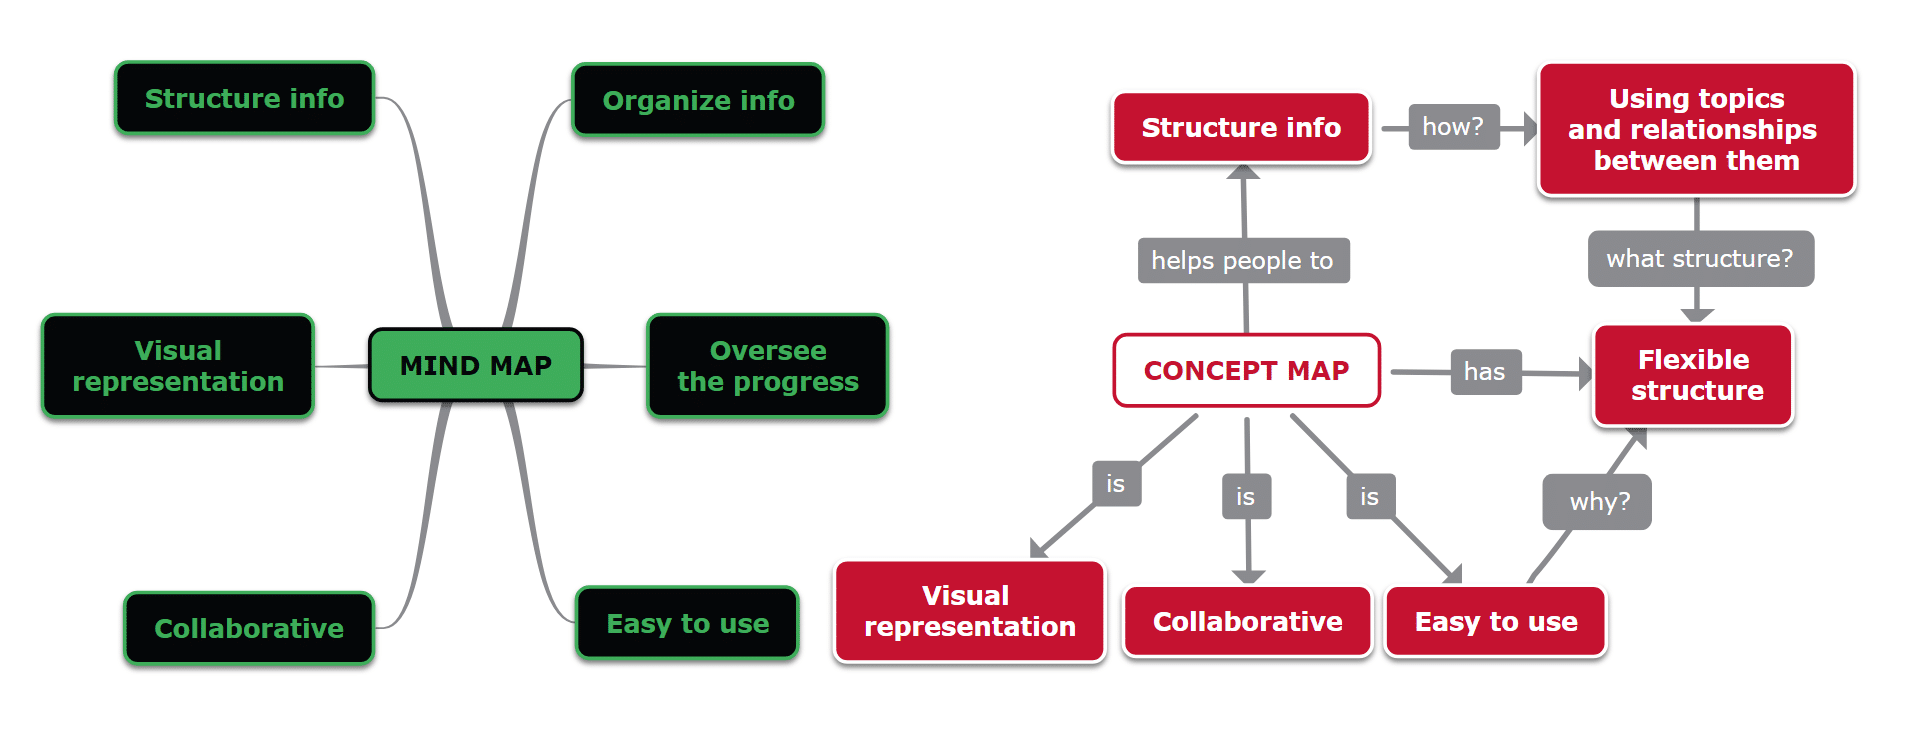 concept map vs mind map - compare